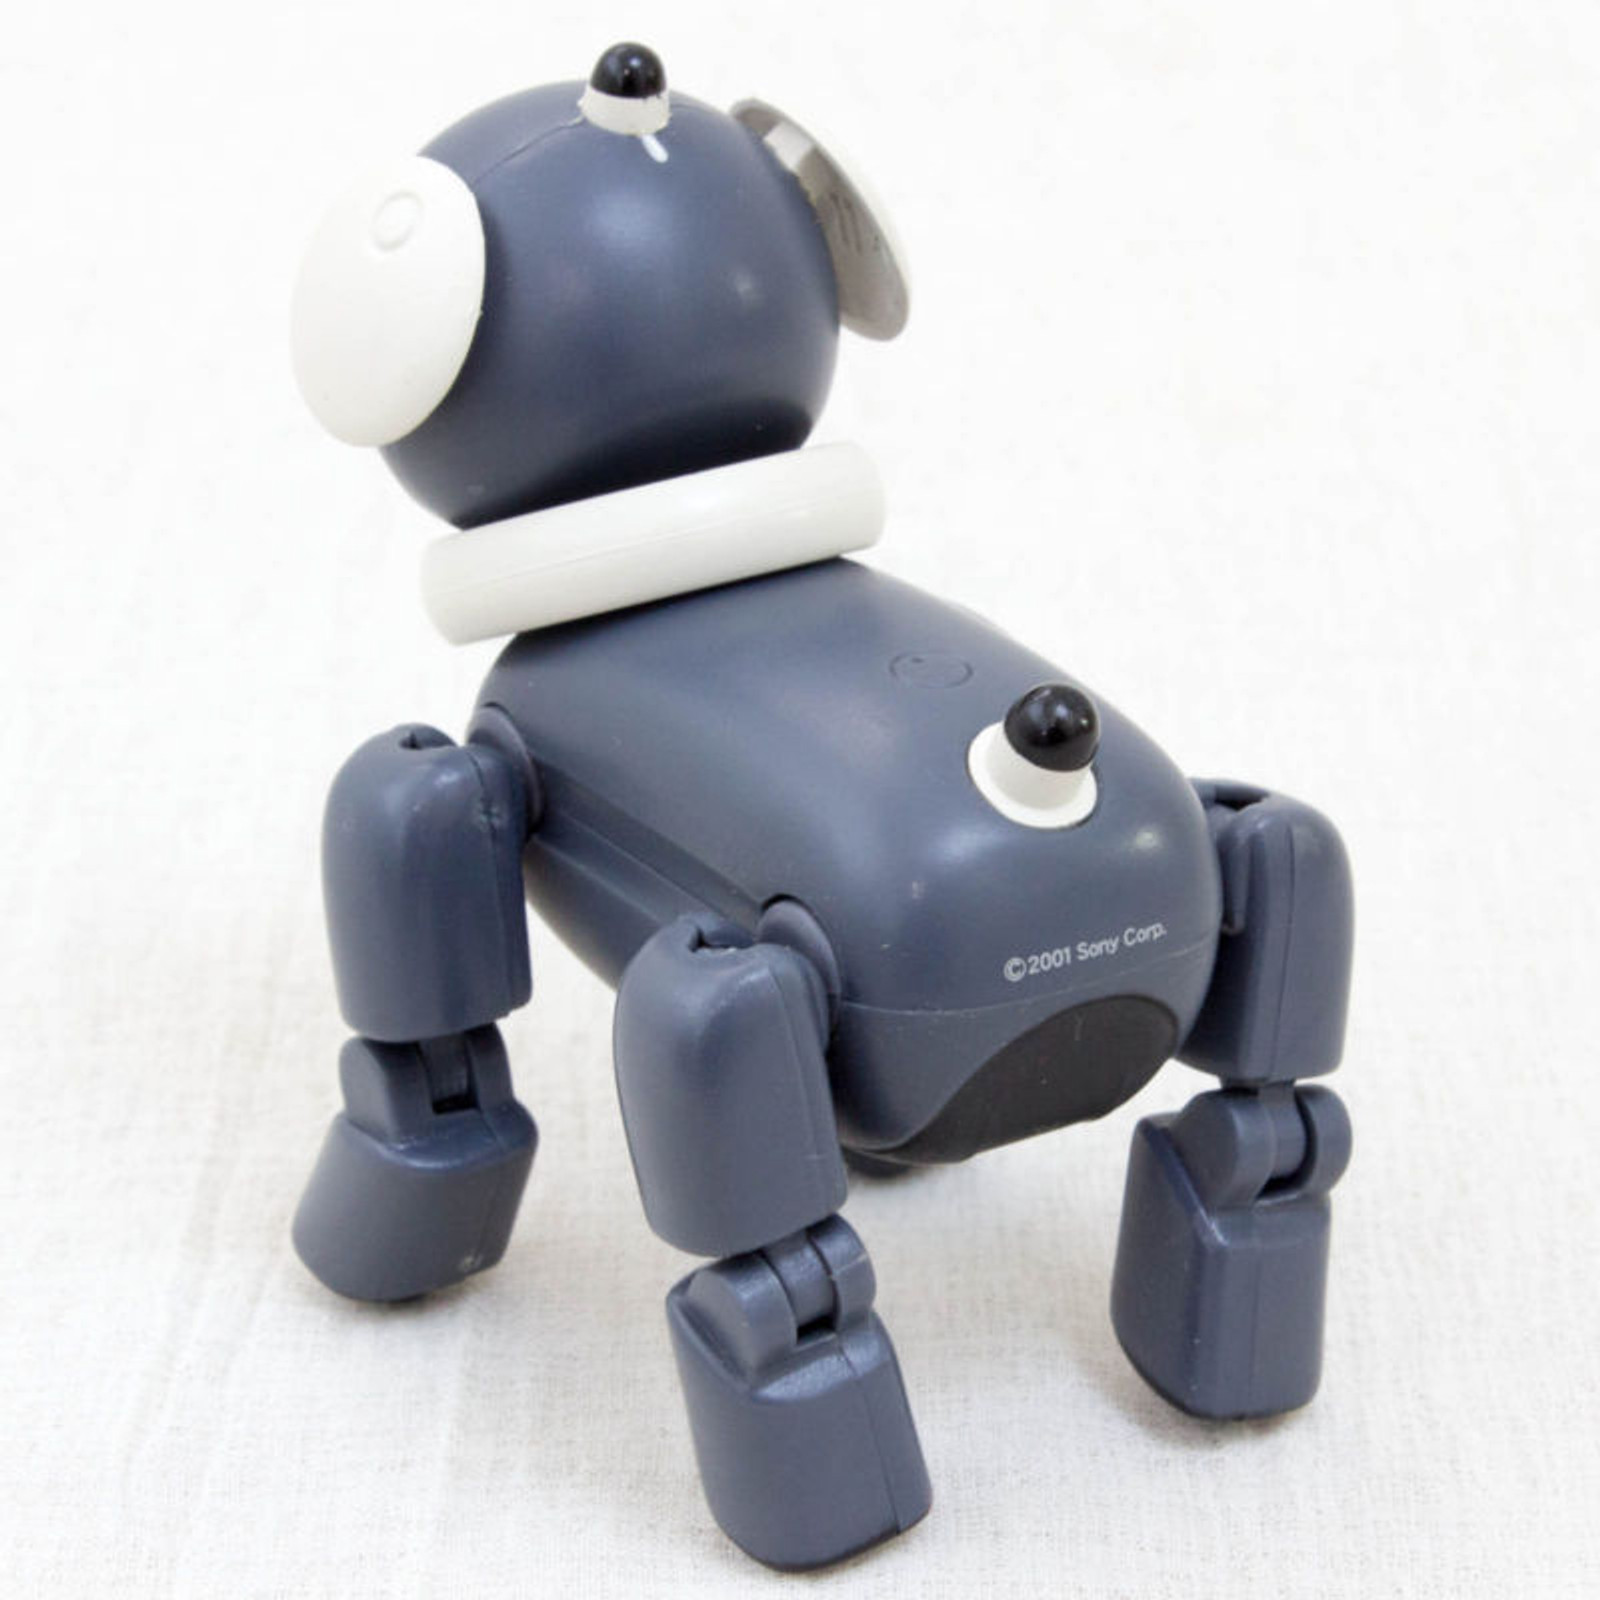 RARE! AIBO Macaron T-shirt Entertainment Robot 1/4 Scale Figure Medicom JAPAN